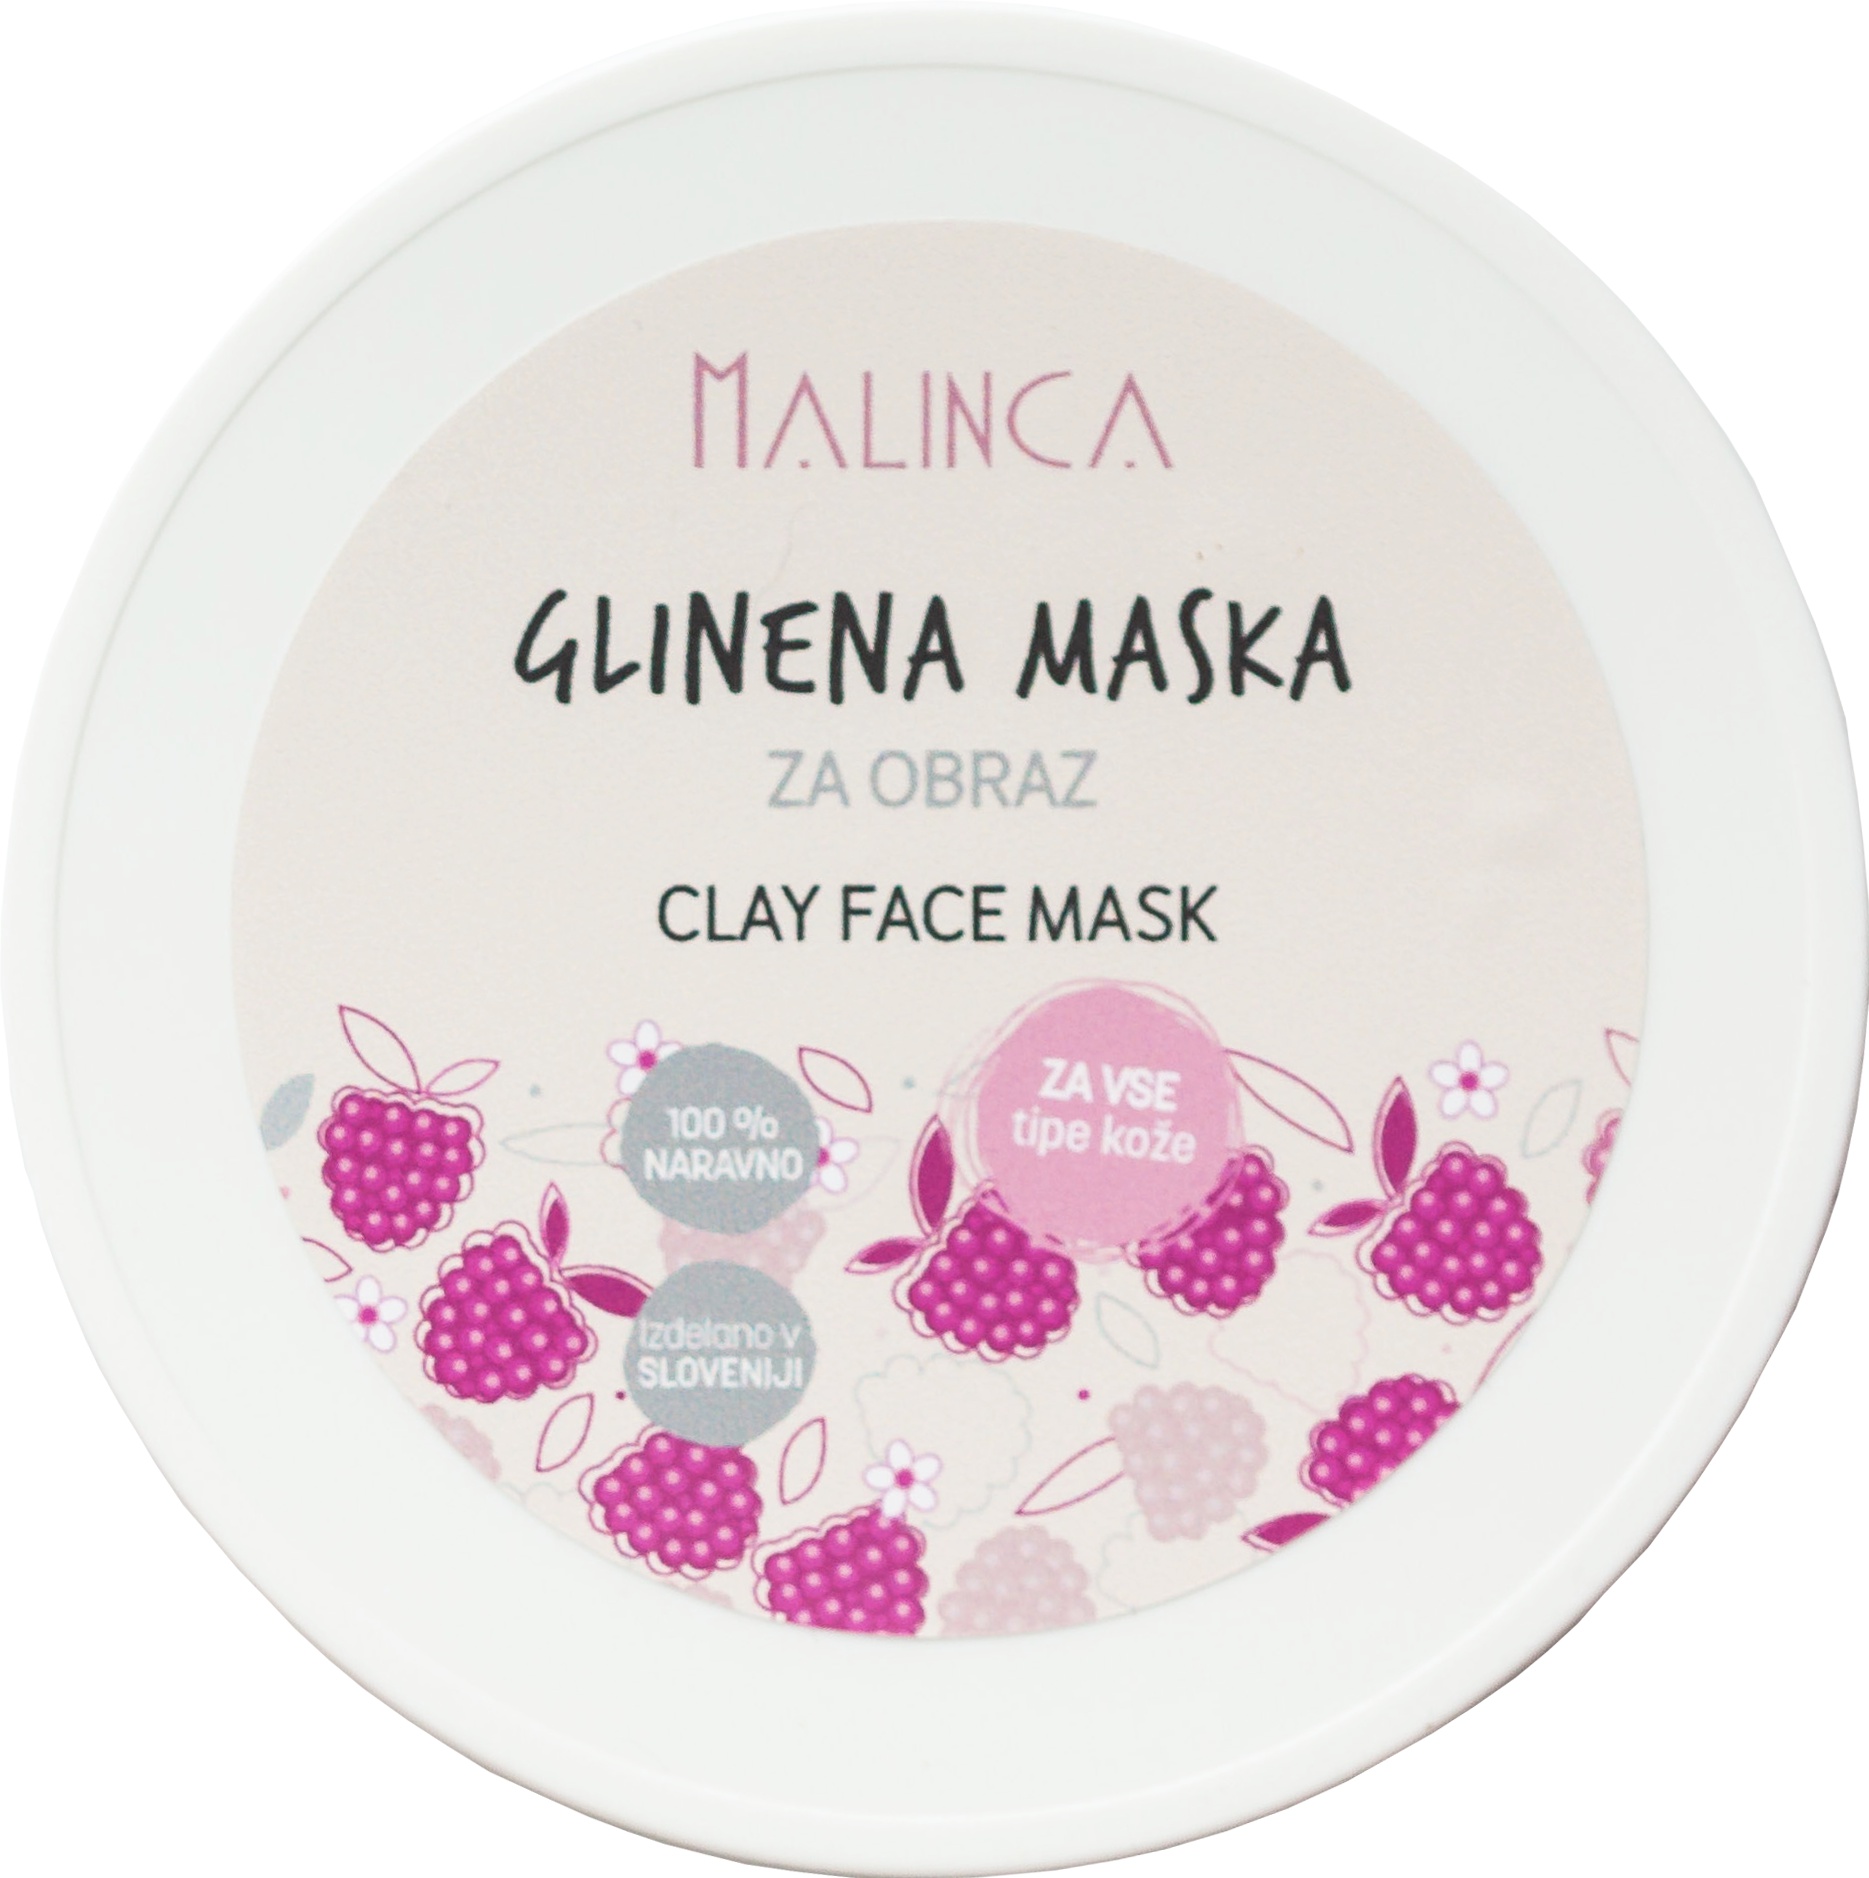 Malinca Clay Face Mask